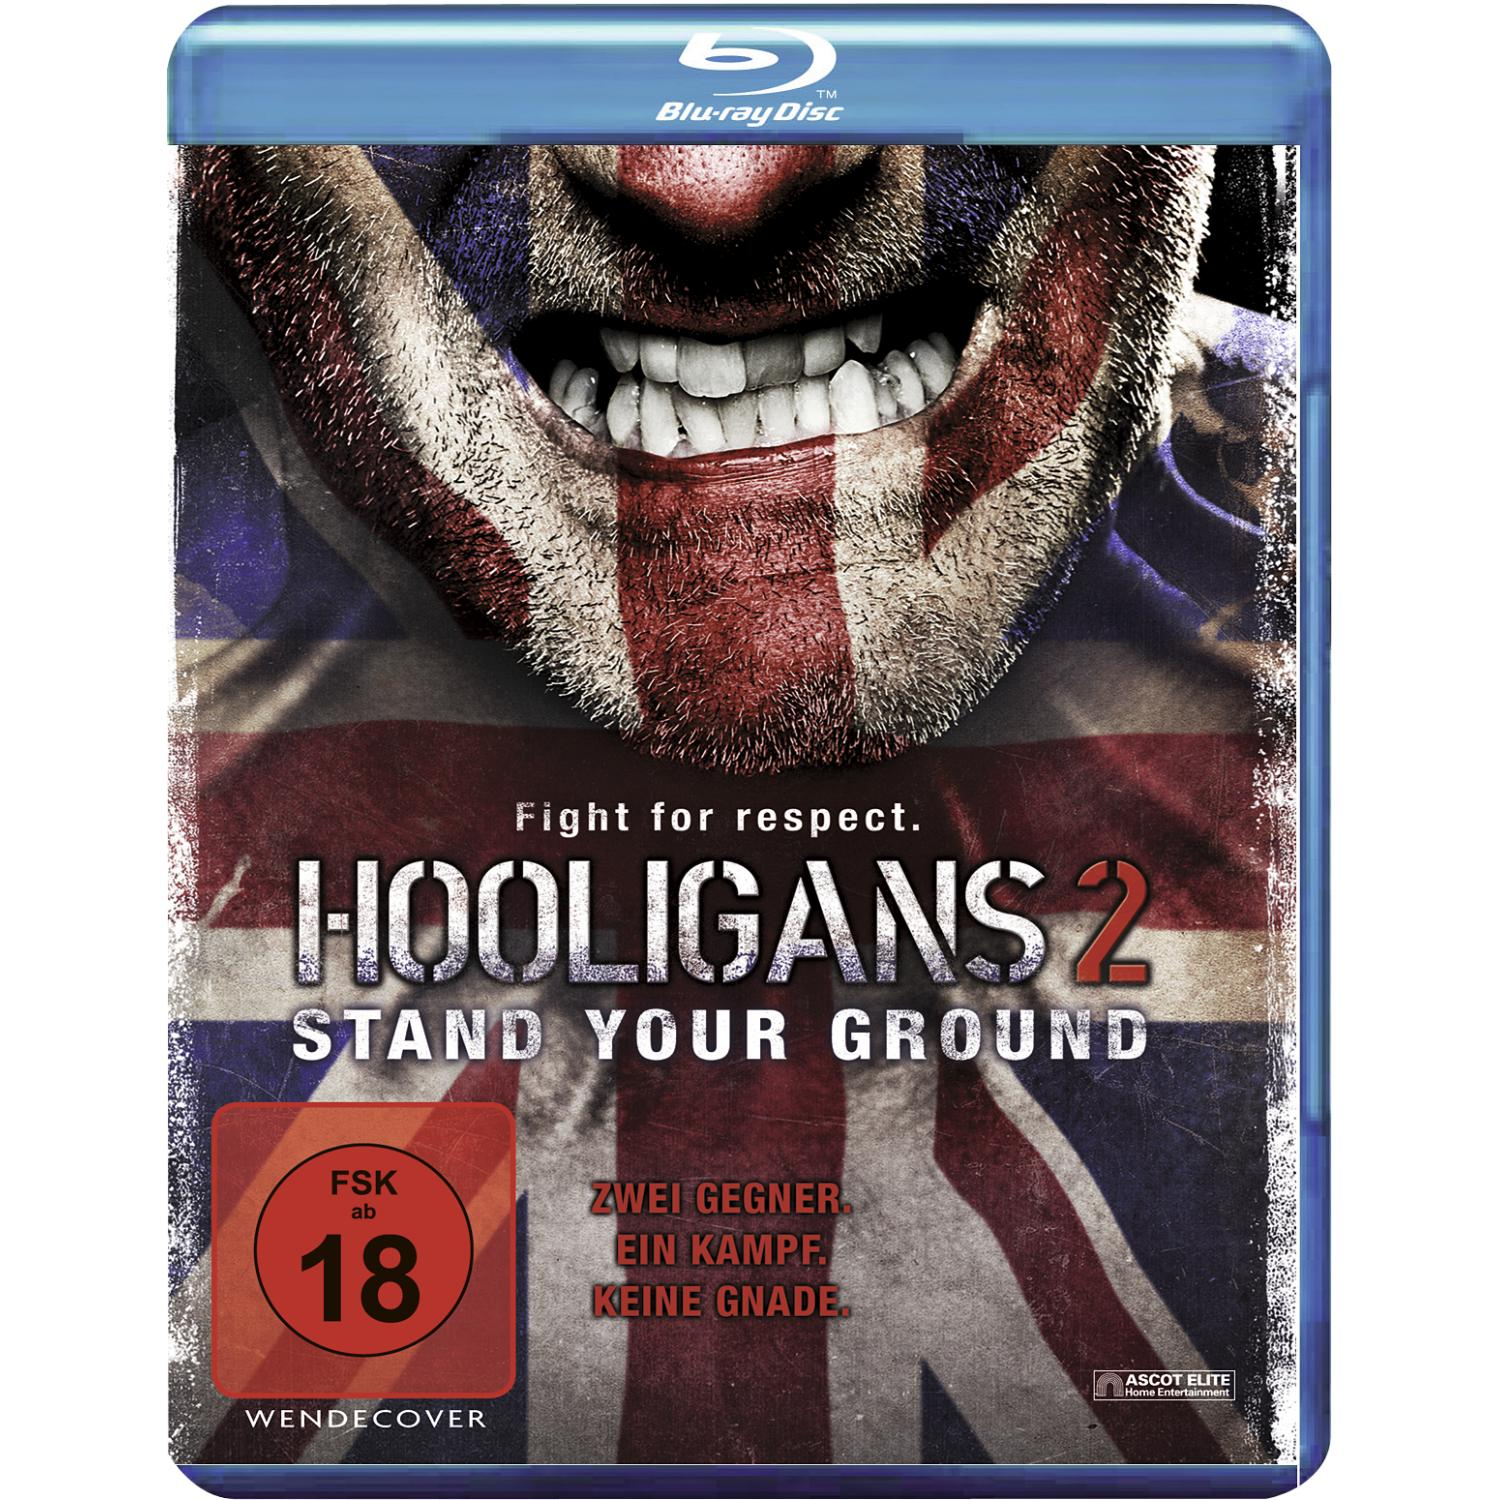 Hooligans 2 Blu-ray